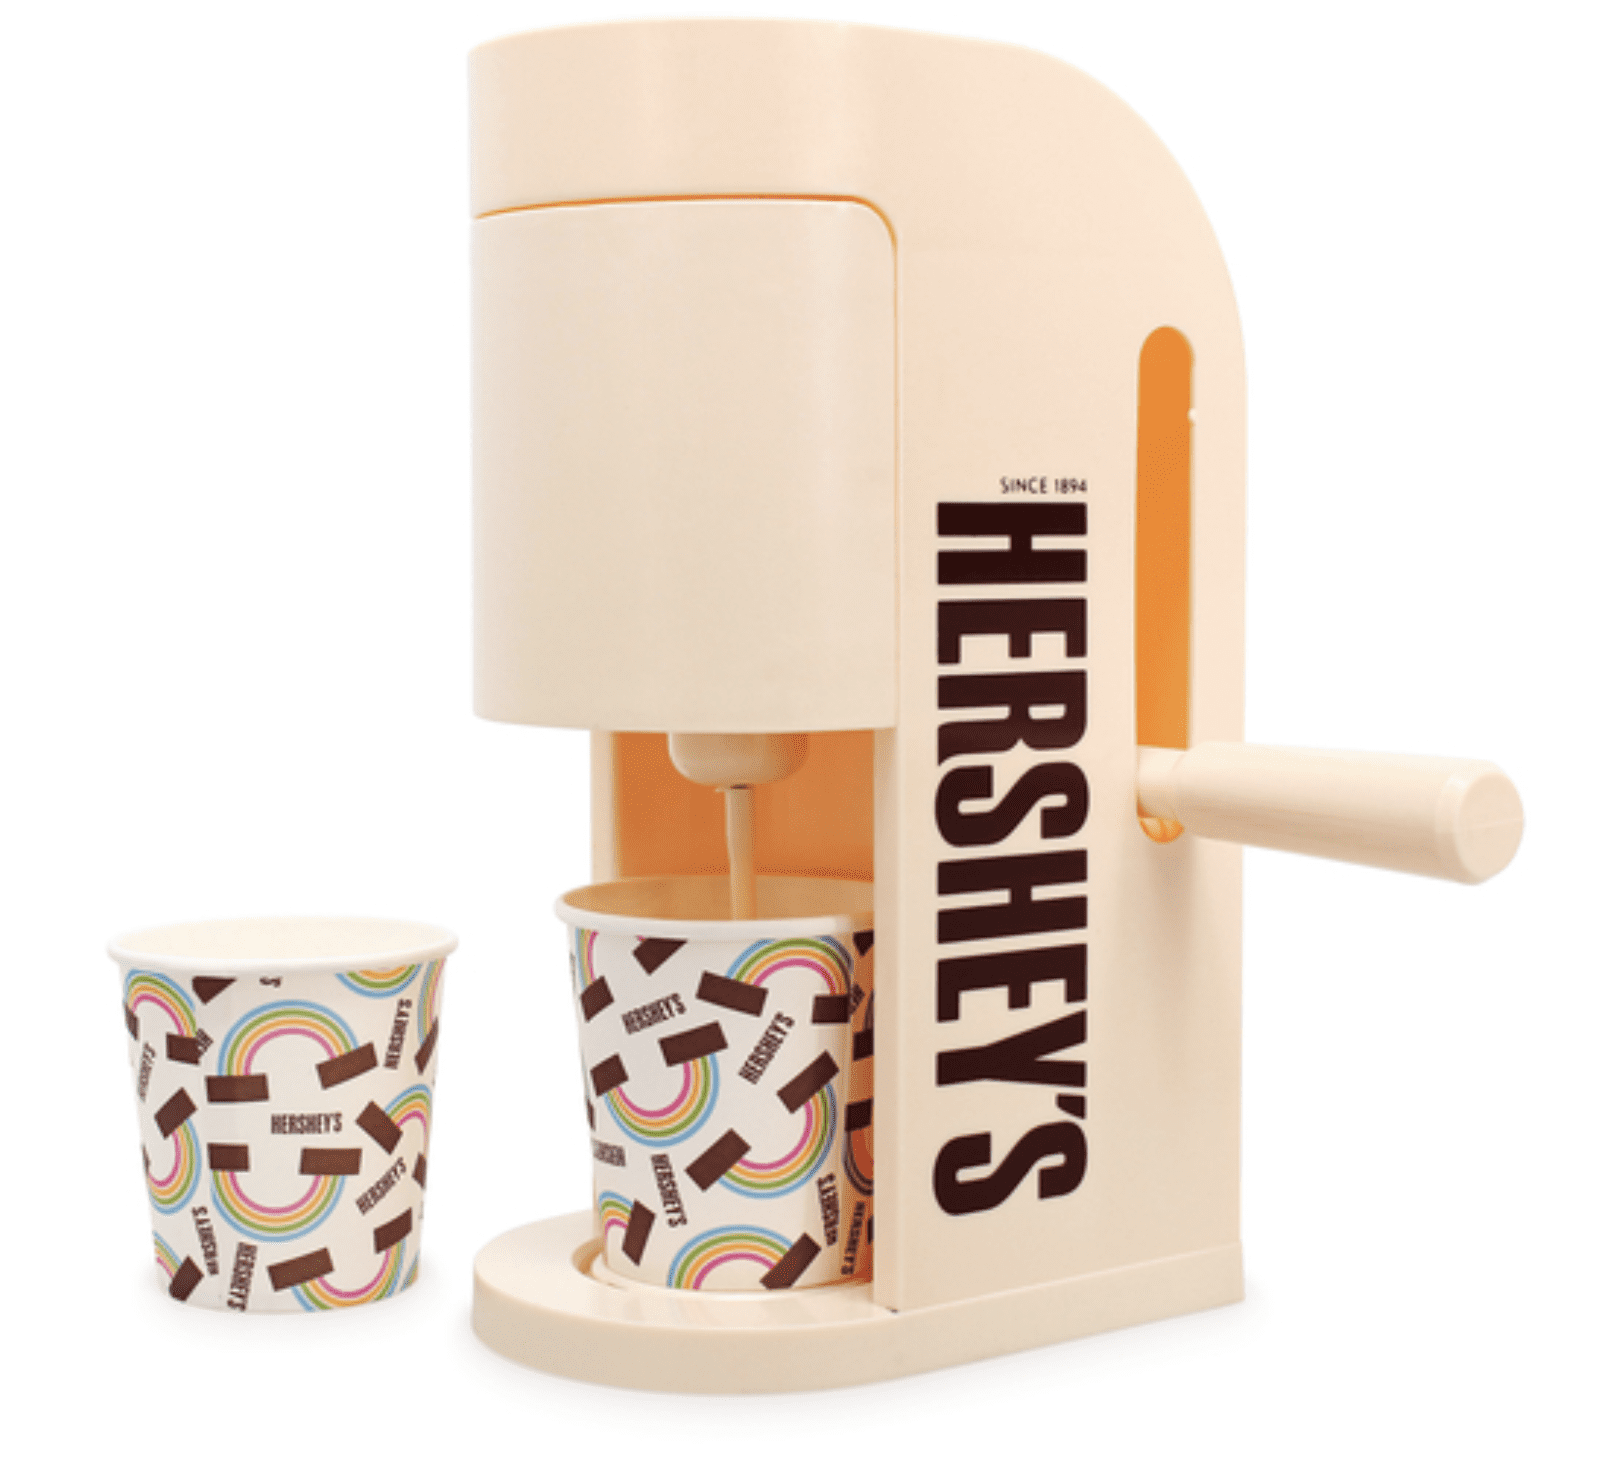 Hersheys Chocolate drink maker